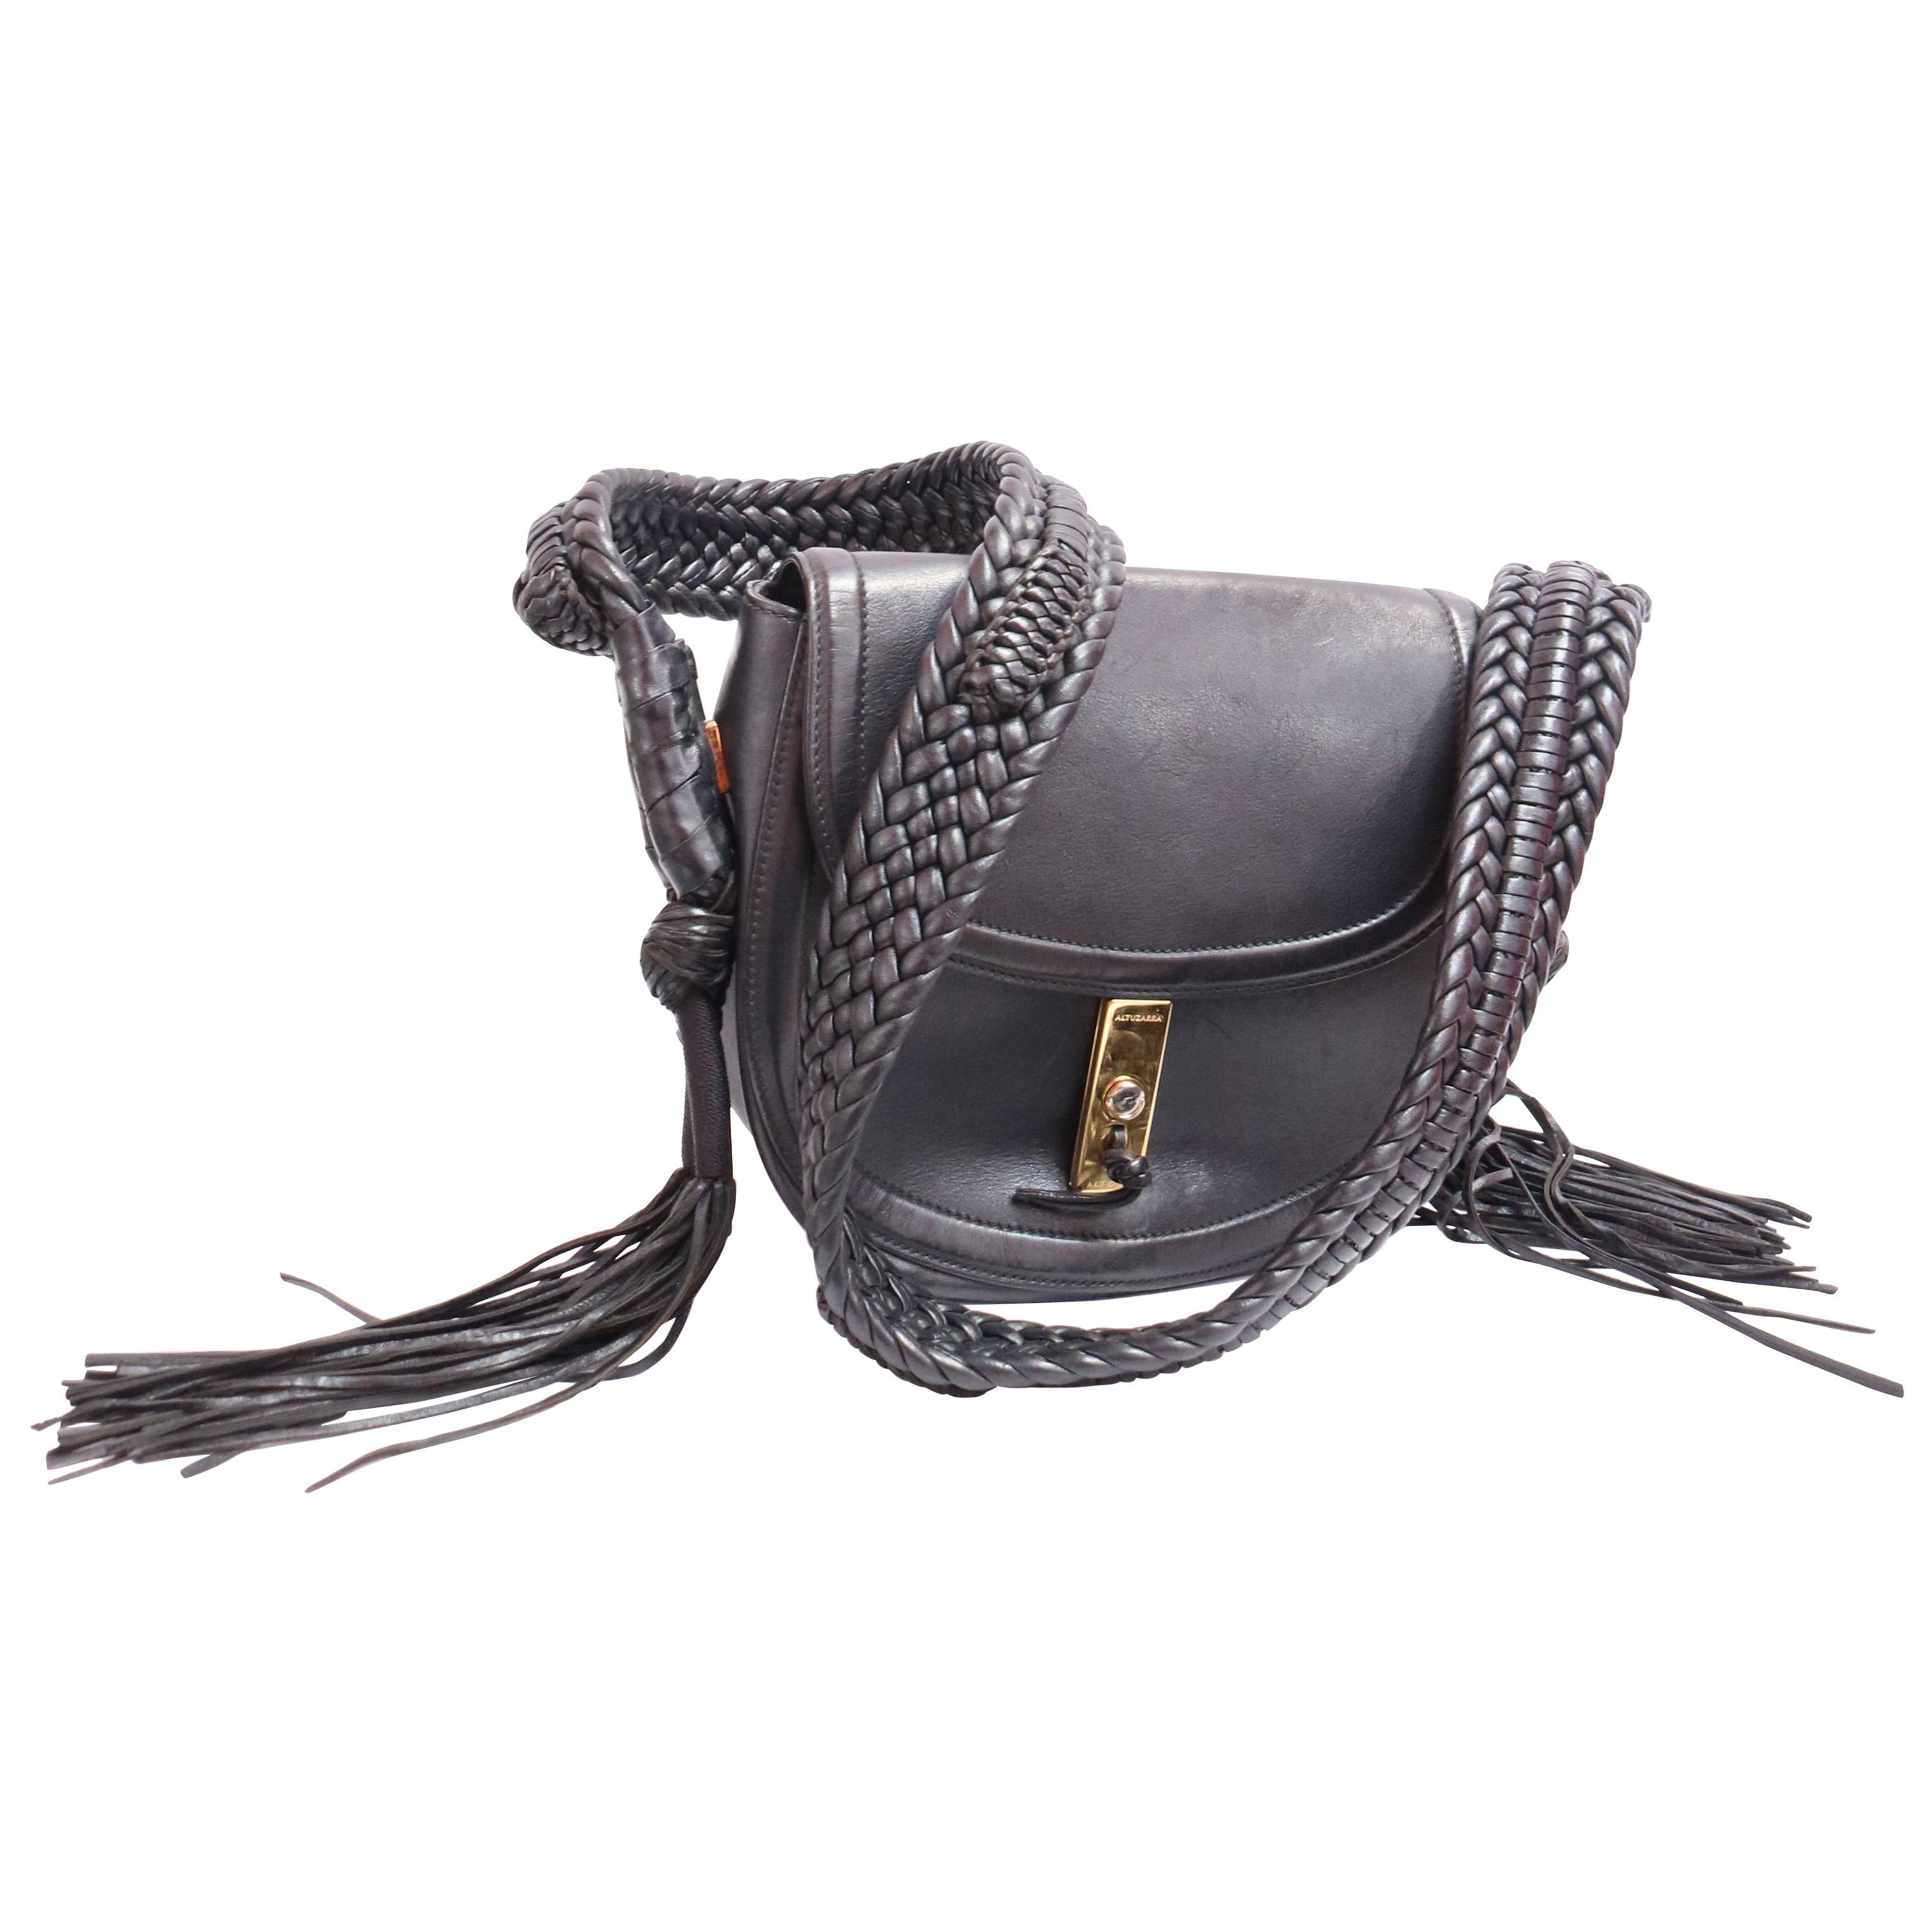 ALTUZARRA Ghianda Bullrope Saddle leather shoulder bag